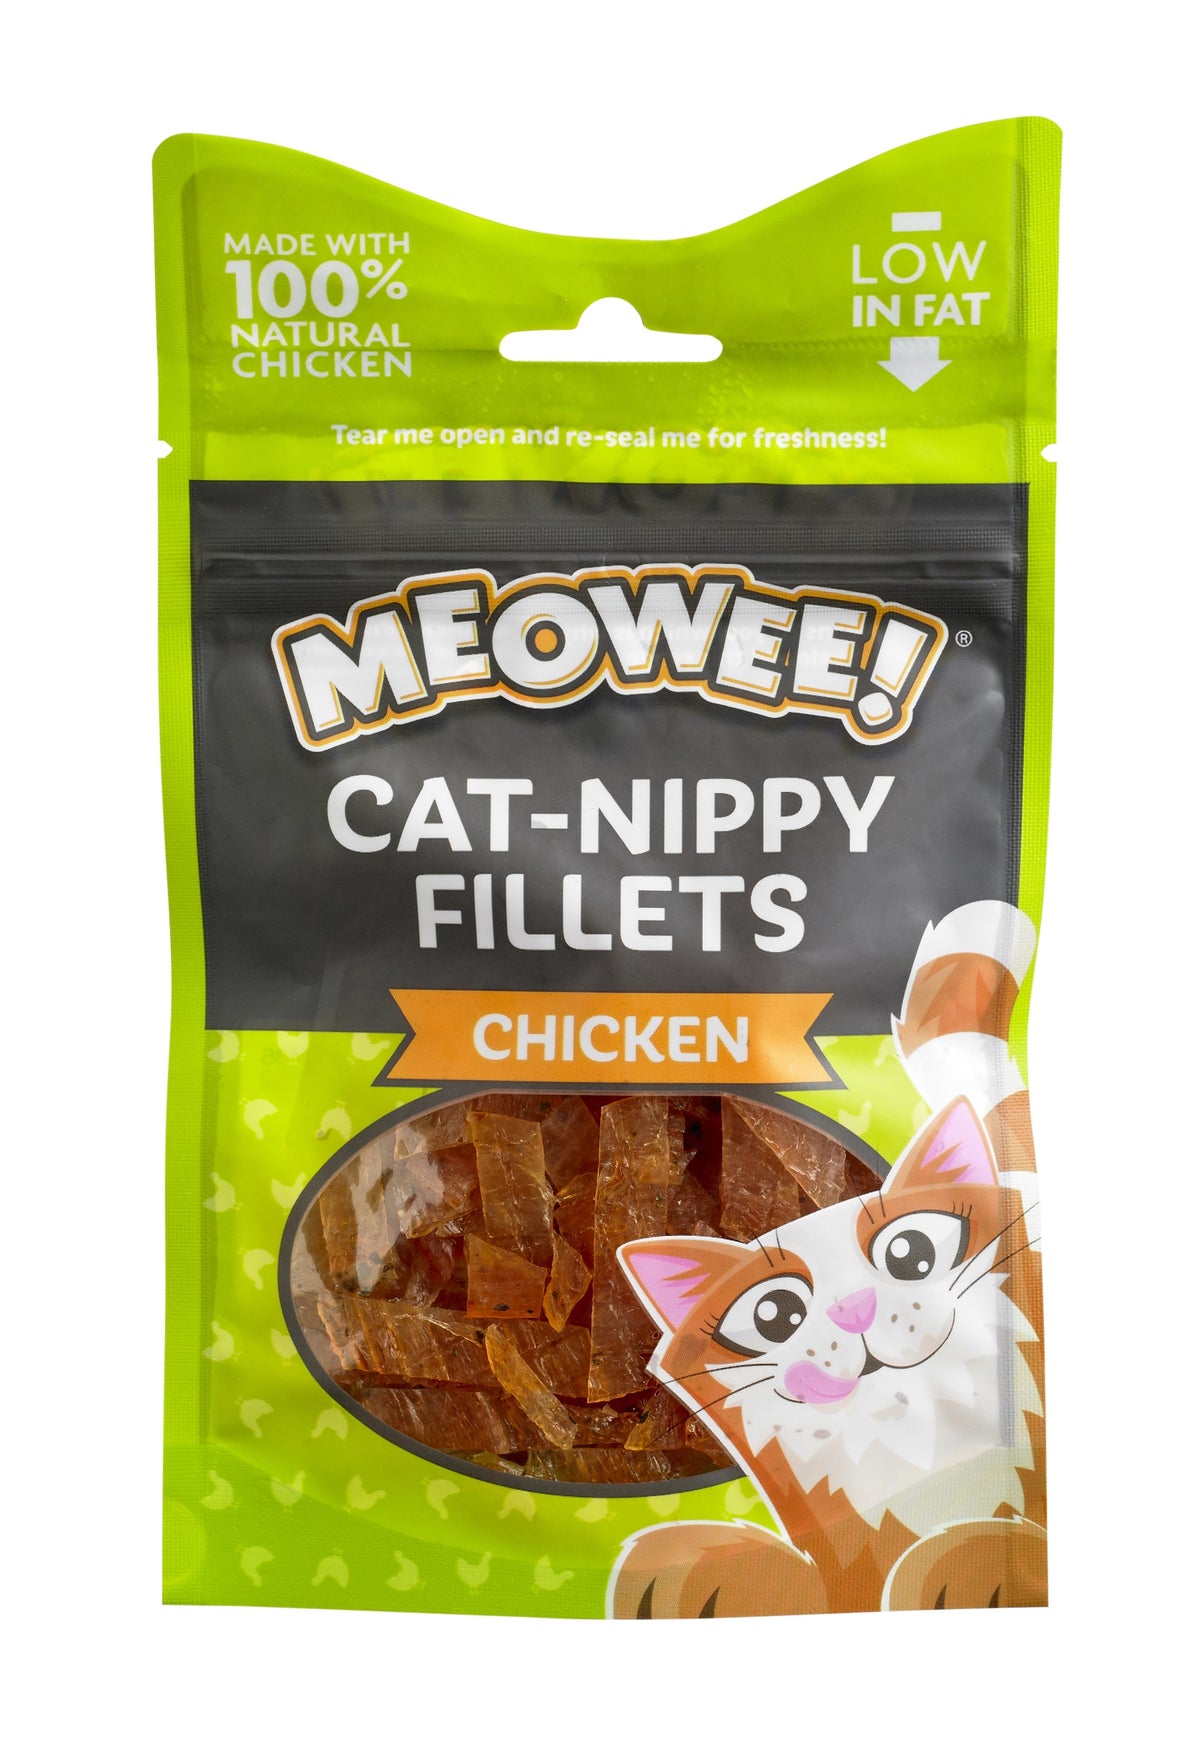 MEOWEE! CAT-NIPPY FILLETS CHICKEN